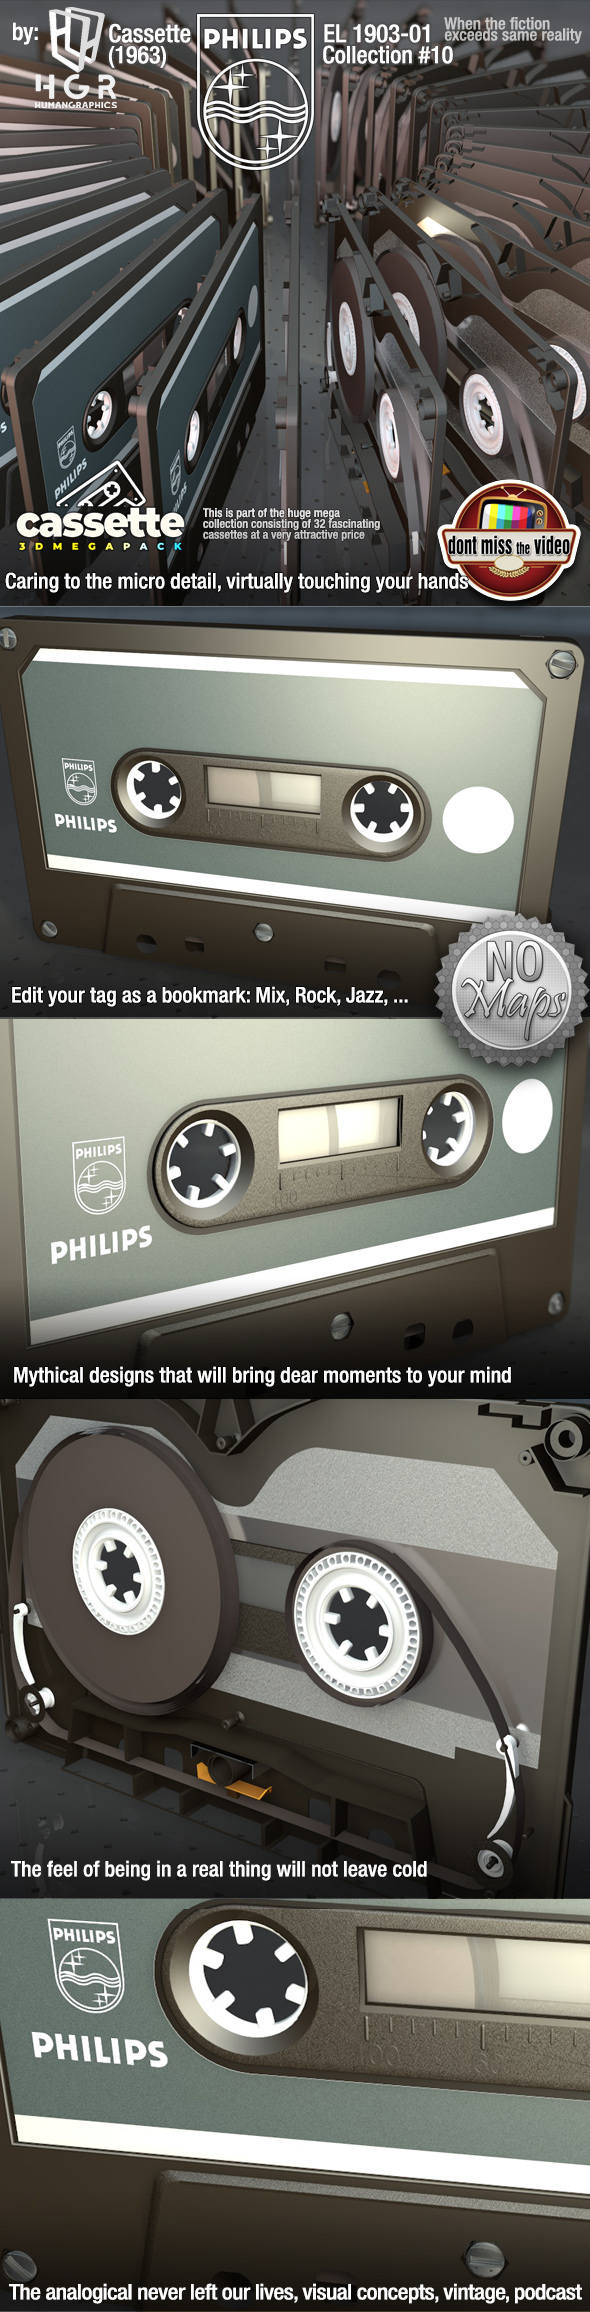 Cassette Phillips EL - 3Docean 28637811